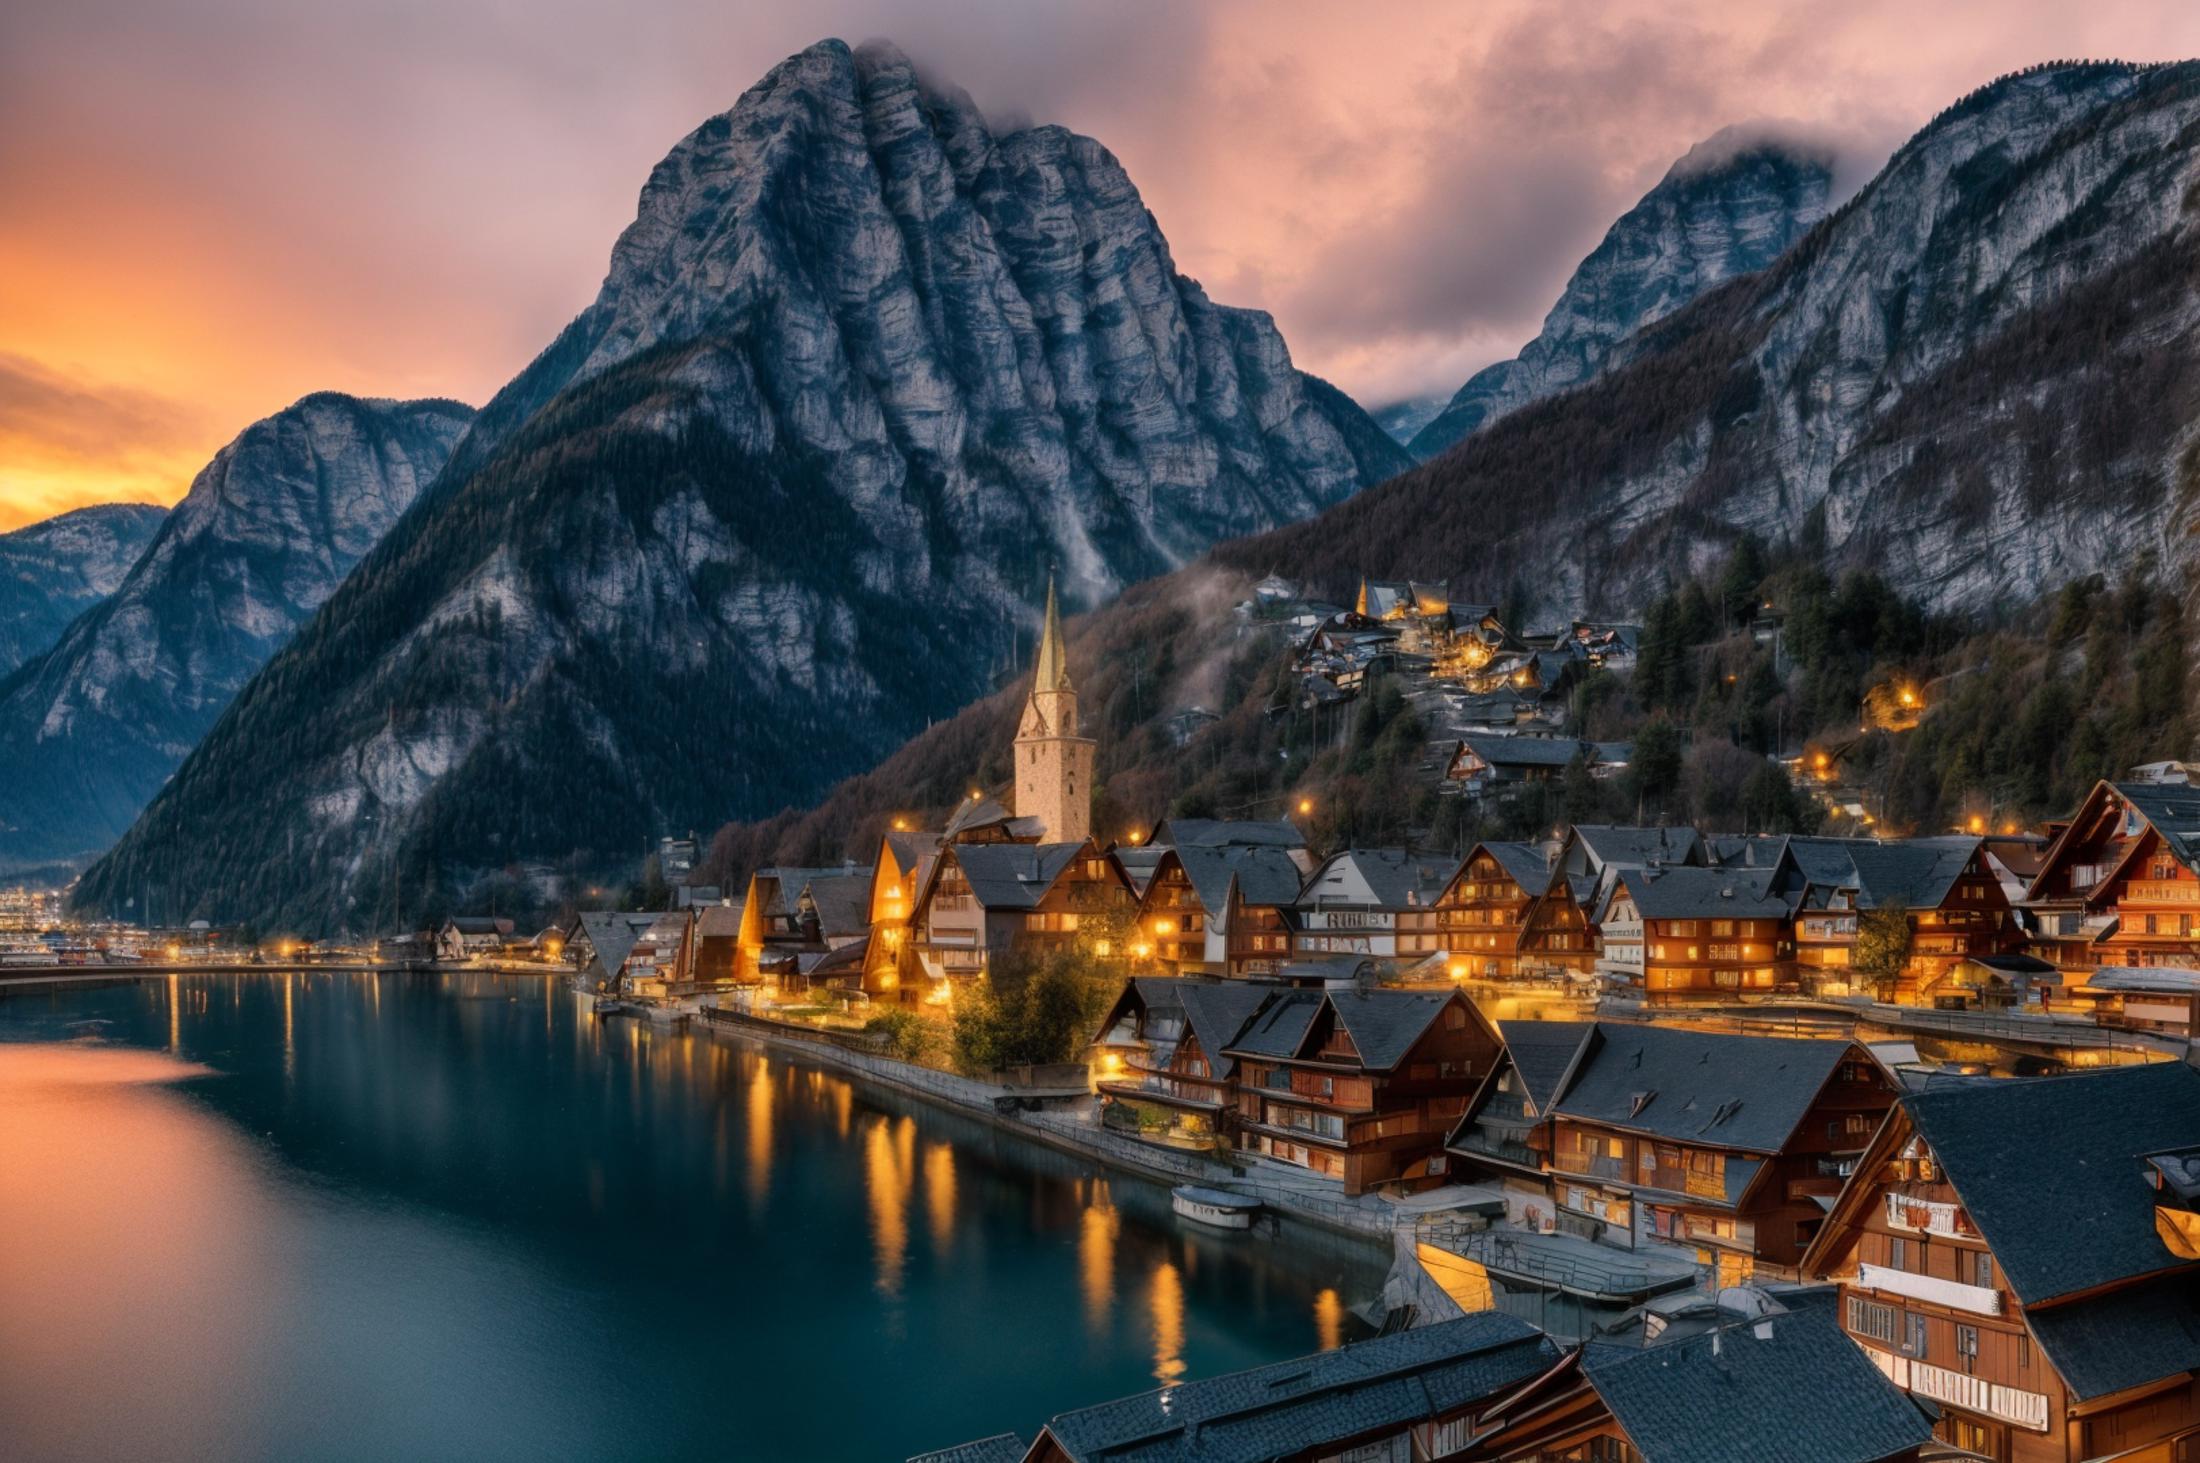 Hallstatt Austria MicroLyCO (European alpine village) image by TopazStudio